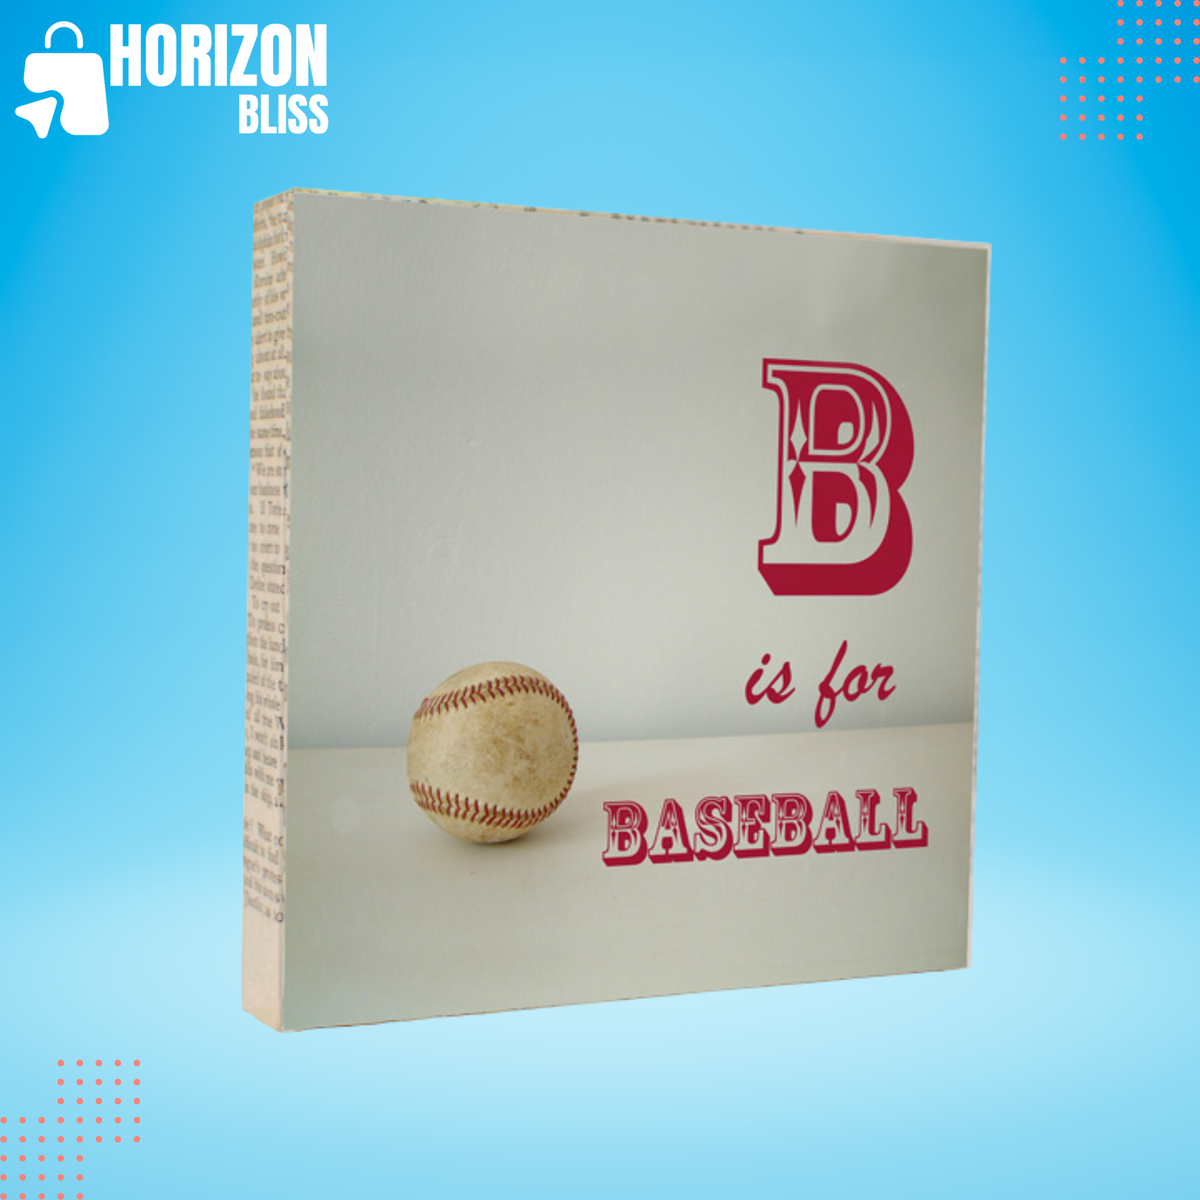 B is for Baseball 5x5 Art Block